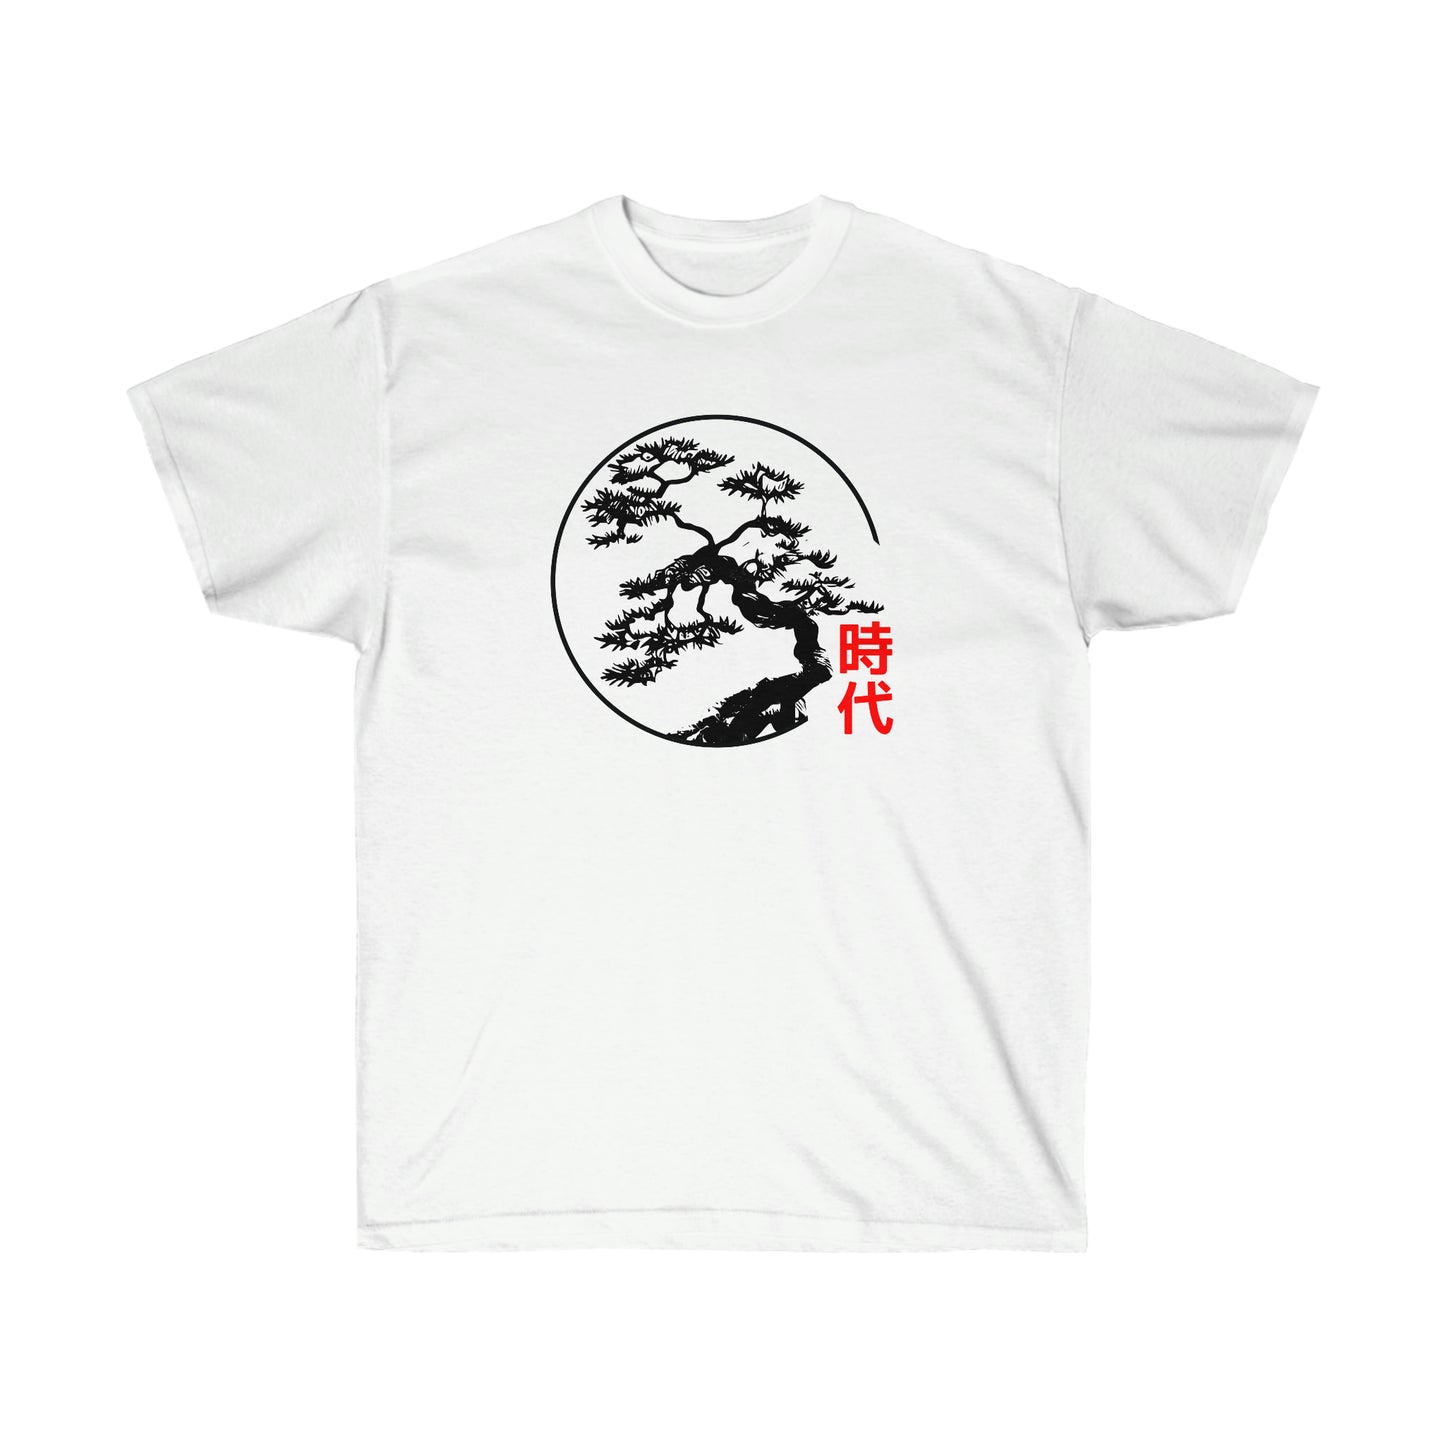 Vintage Bonsai Shirt Zen Bonsai Shirt Gift Idea Japanese Art Tee Zen Meditation t-shirt Karate Buddhist Enso Circle